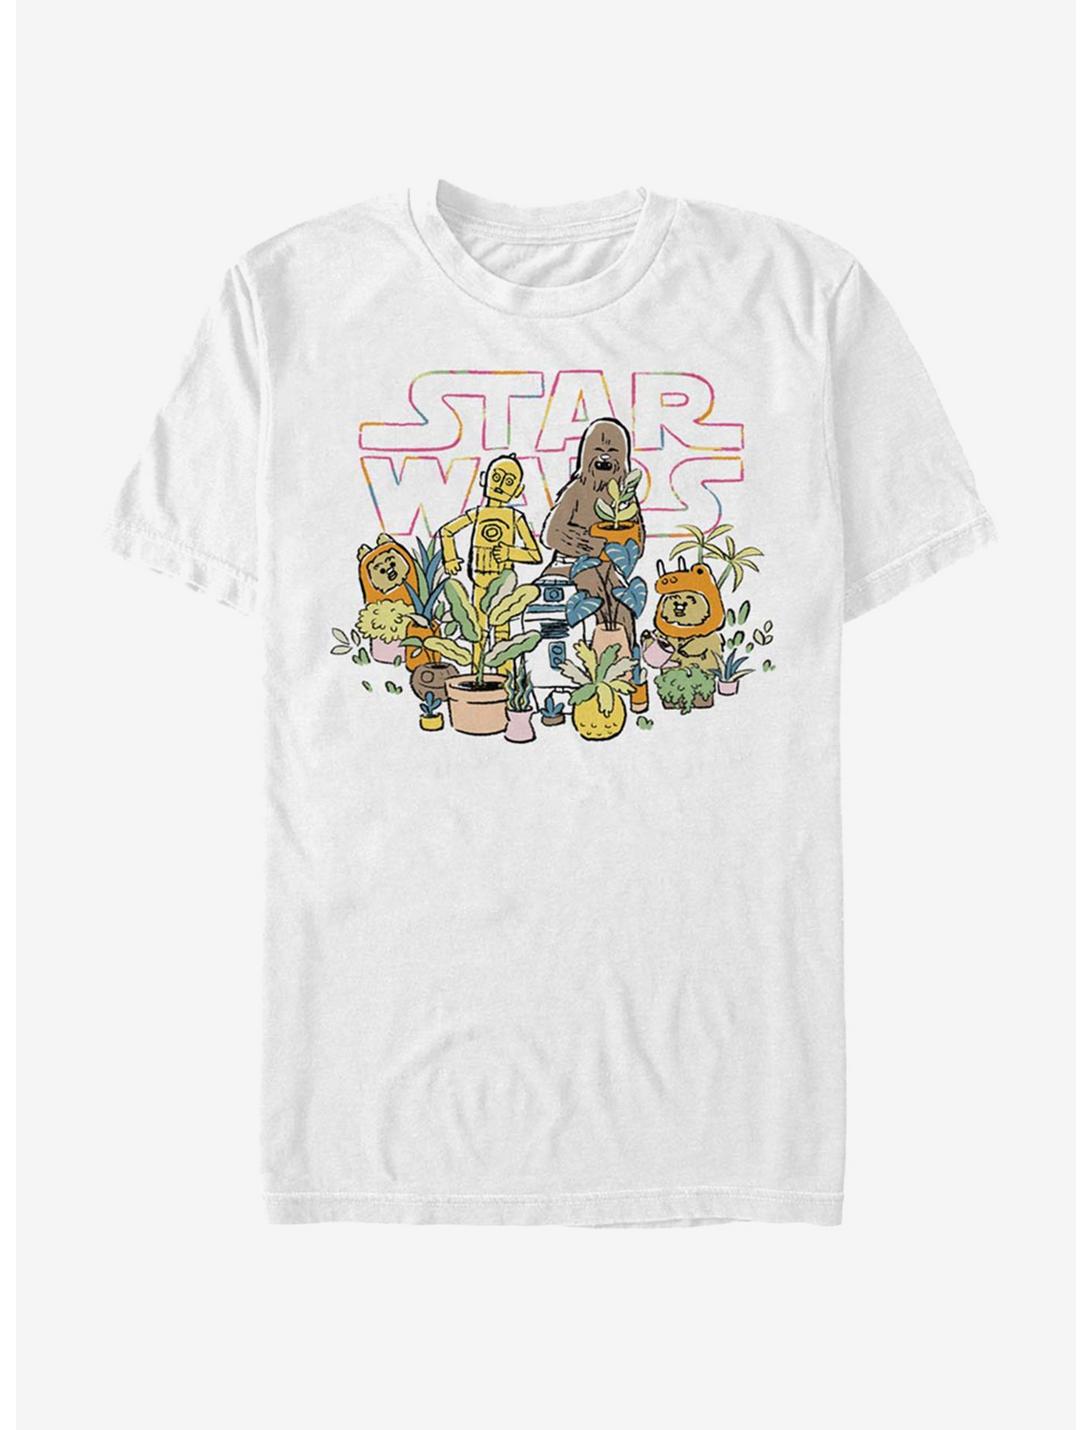 Star Wars Greenhouse T-Shirt, WHITE, hi-res